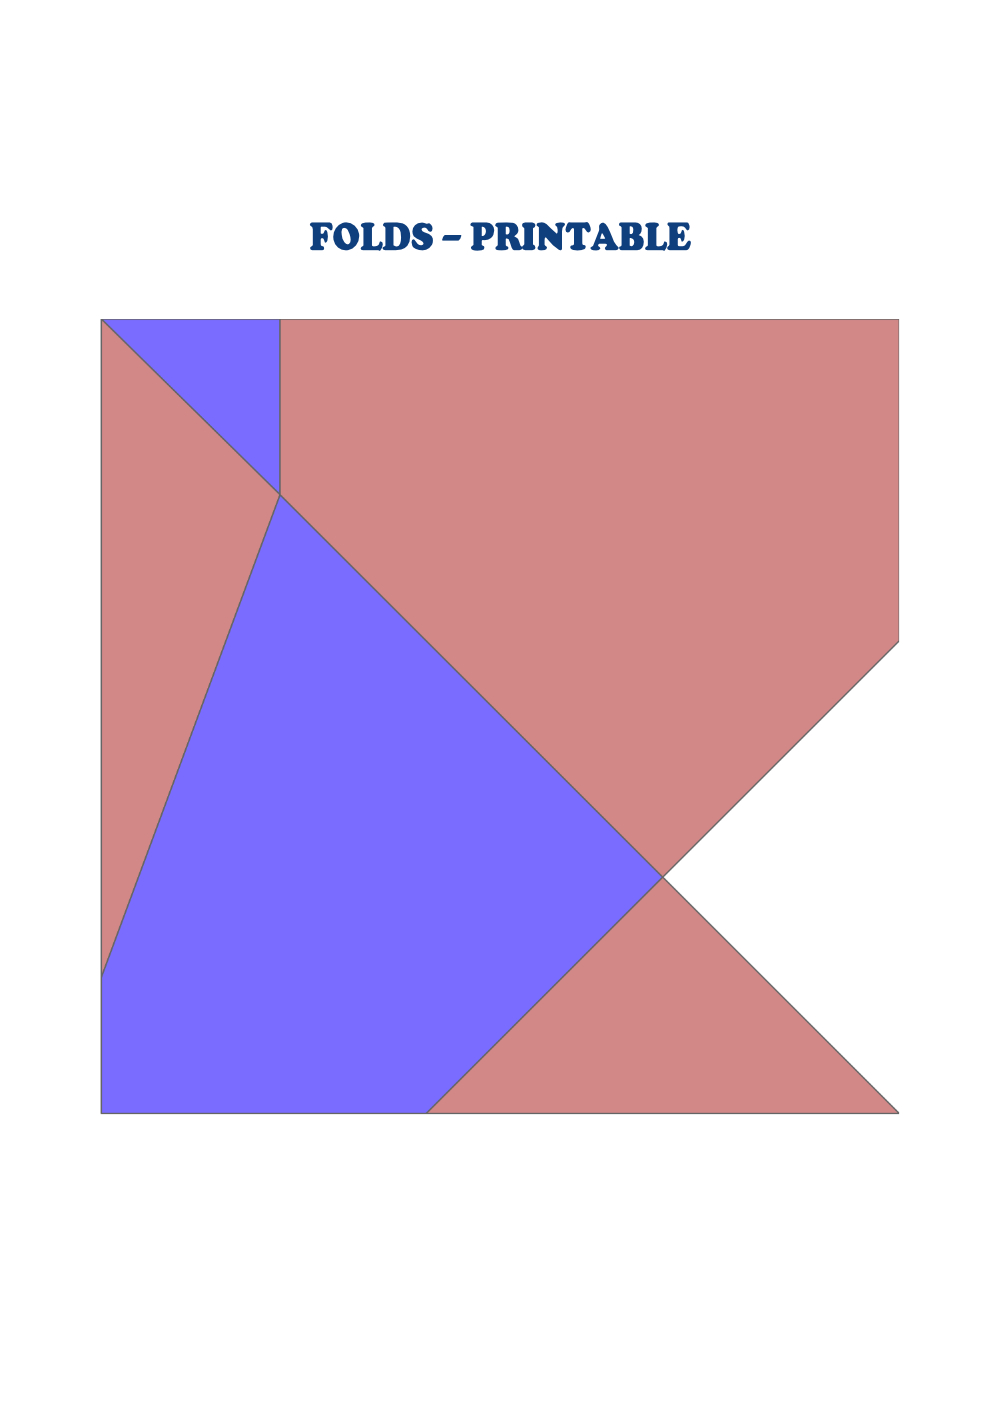 Folds puzzle printable version